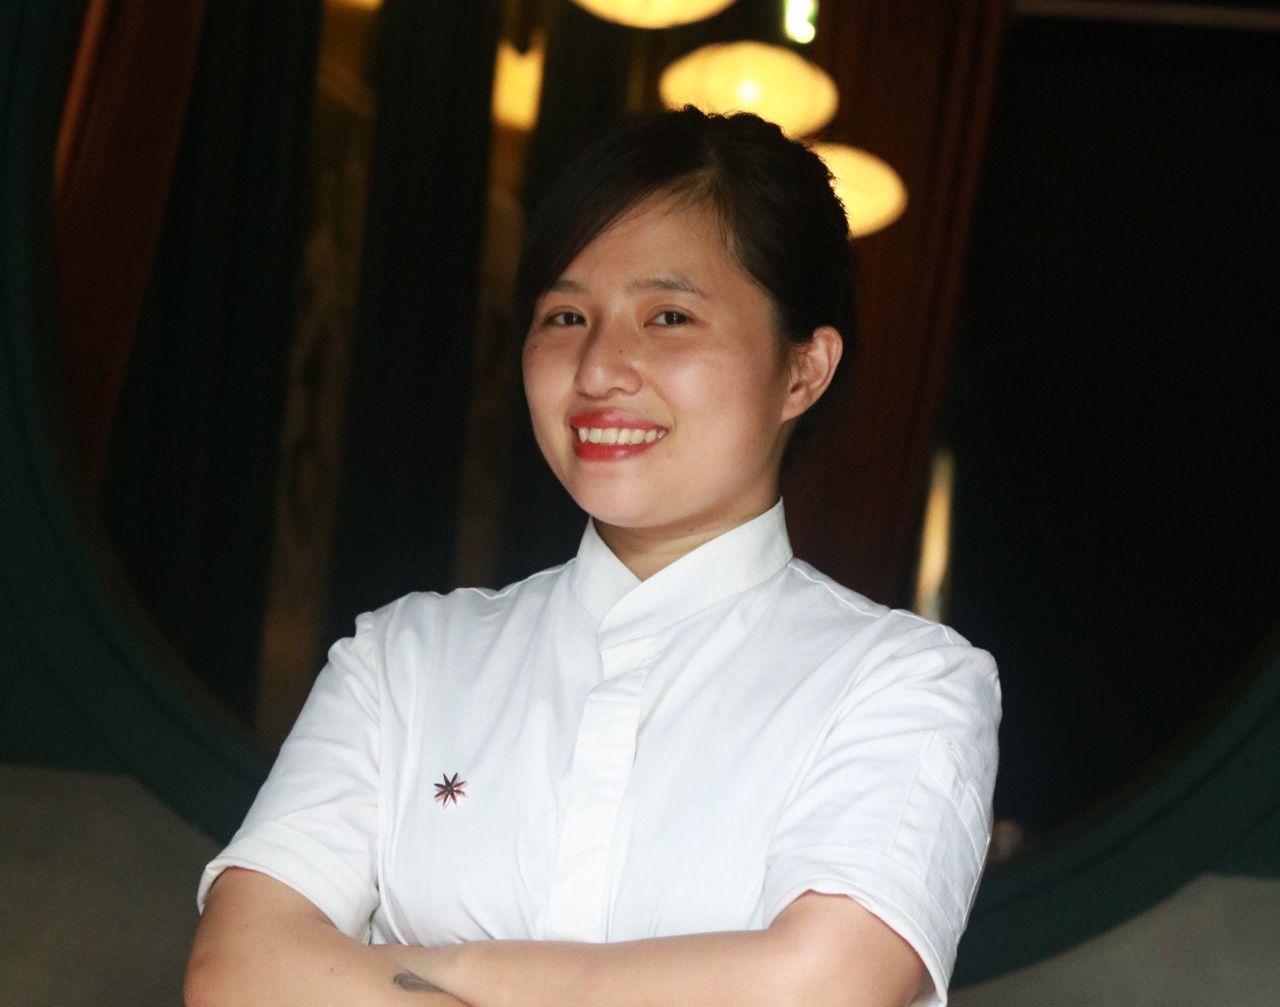 Chef Sam Trần